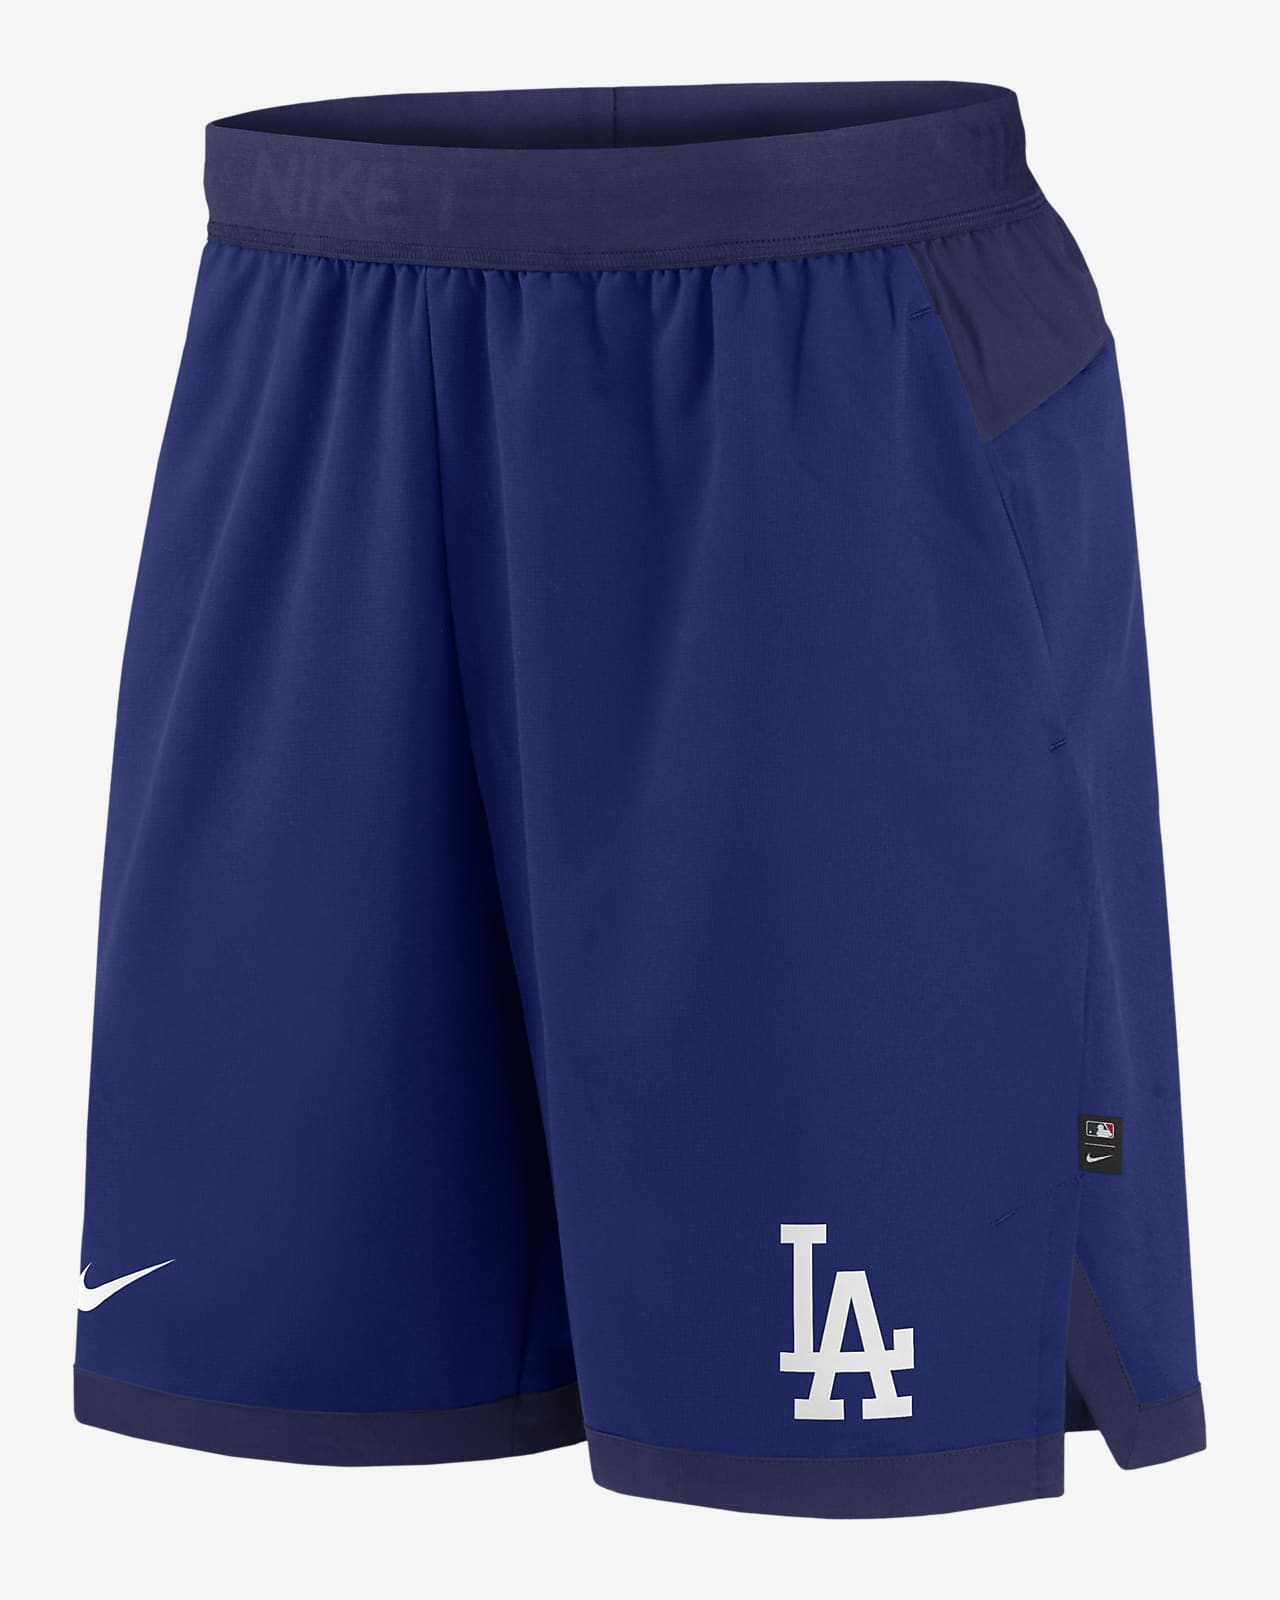 Nike Dri-FIT Flex (MLB Los Angeles Dodgers) Men's Shorts